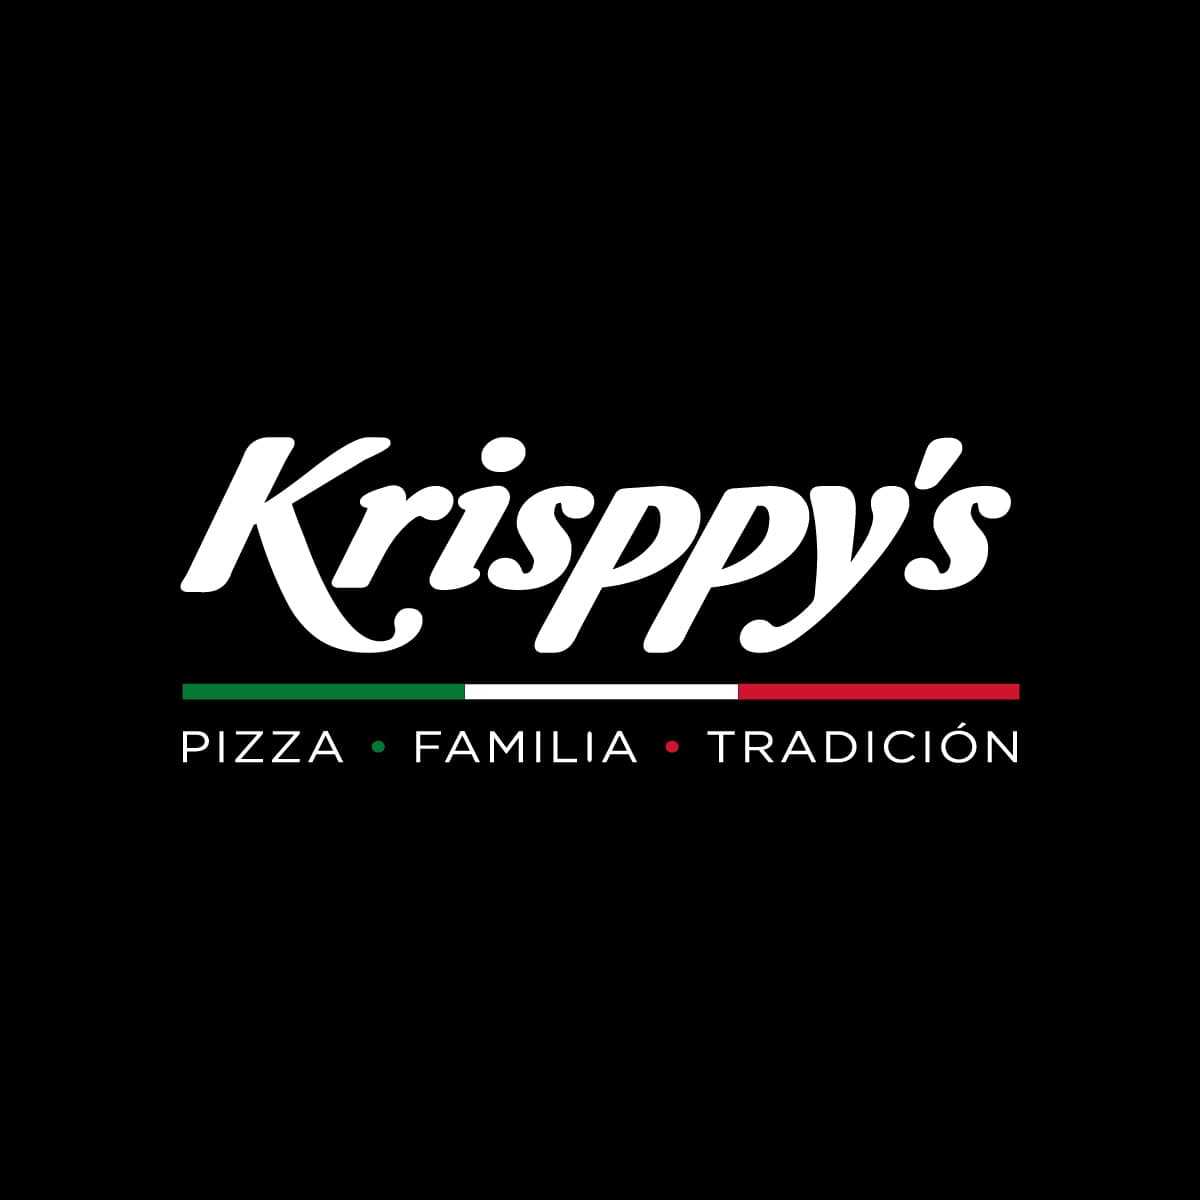 Krisppy’s